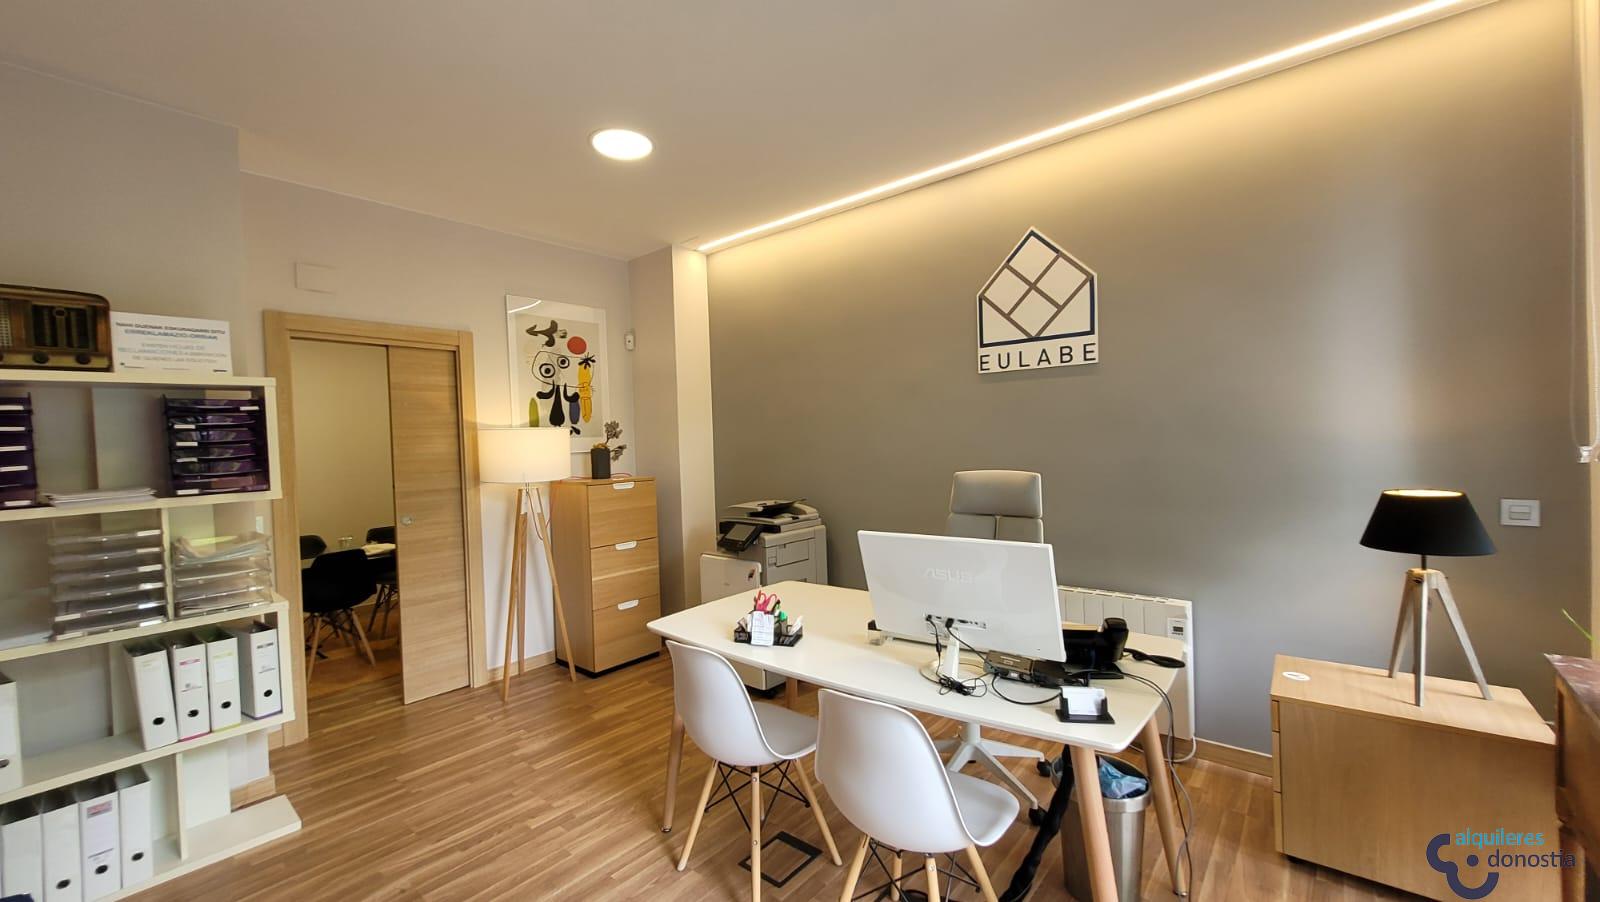 For rent of office in Donostia-San Sebastián